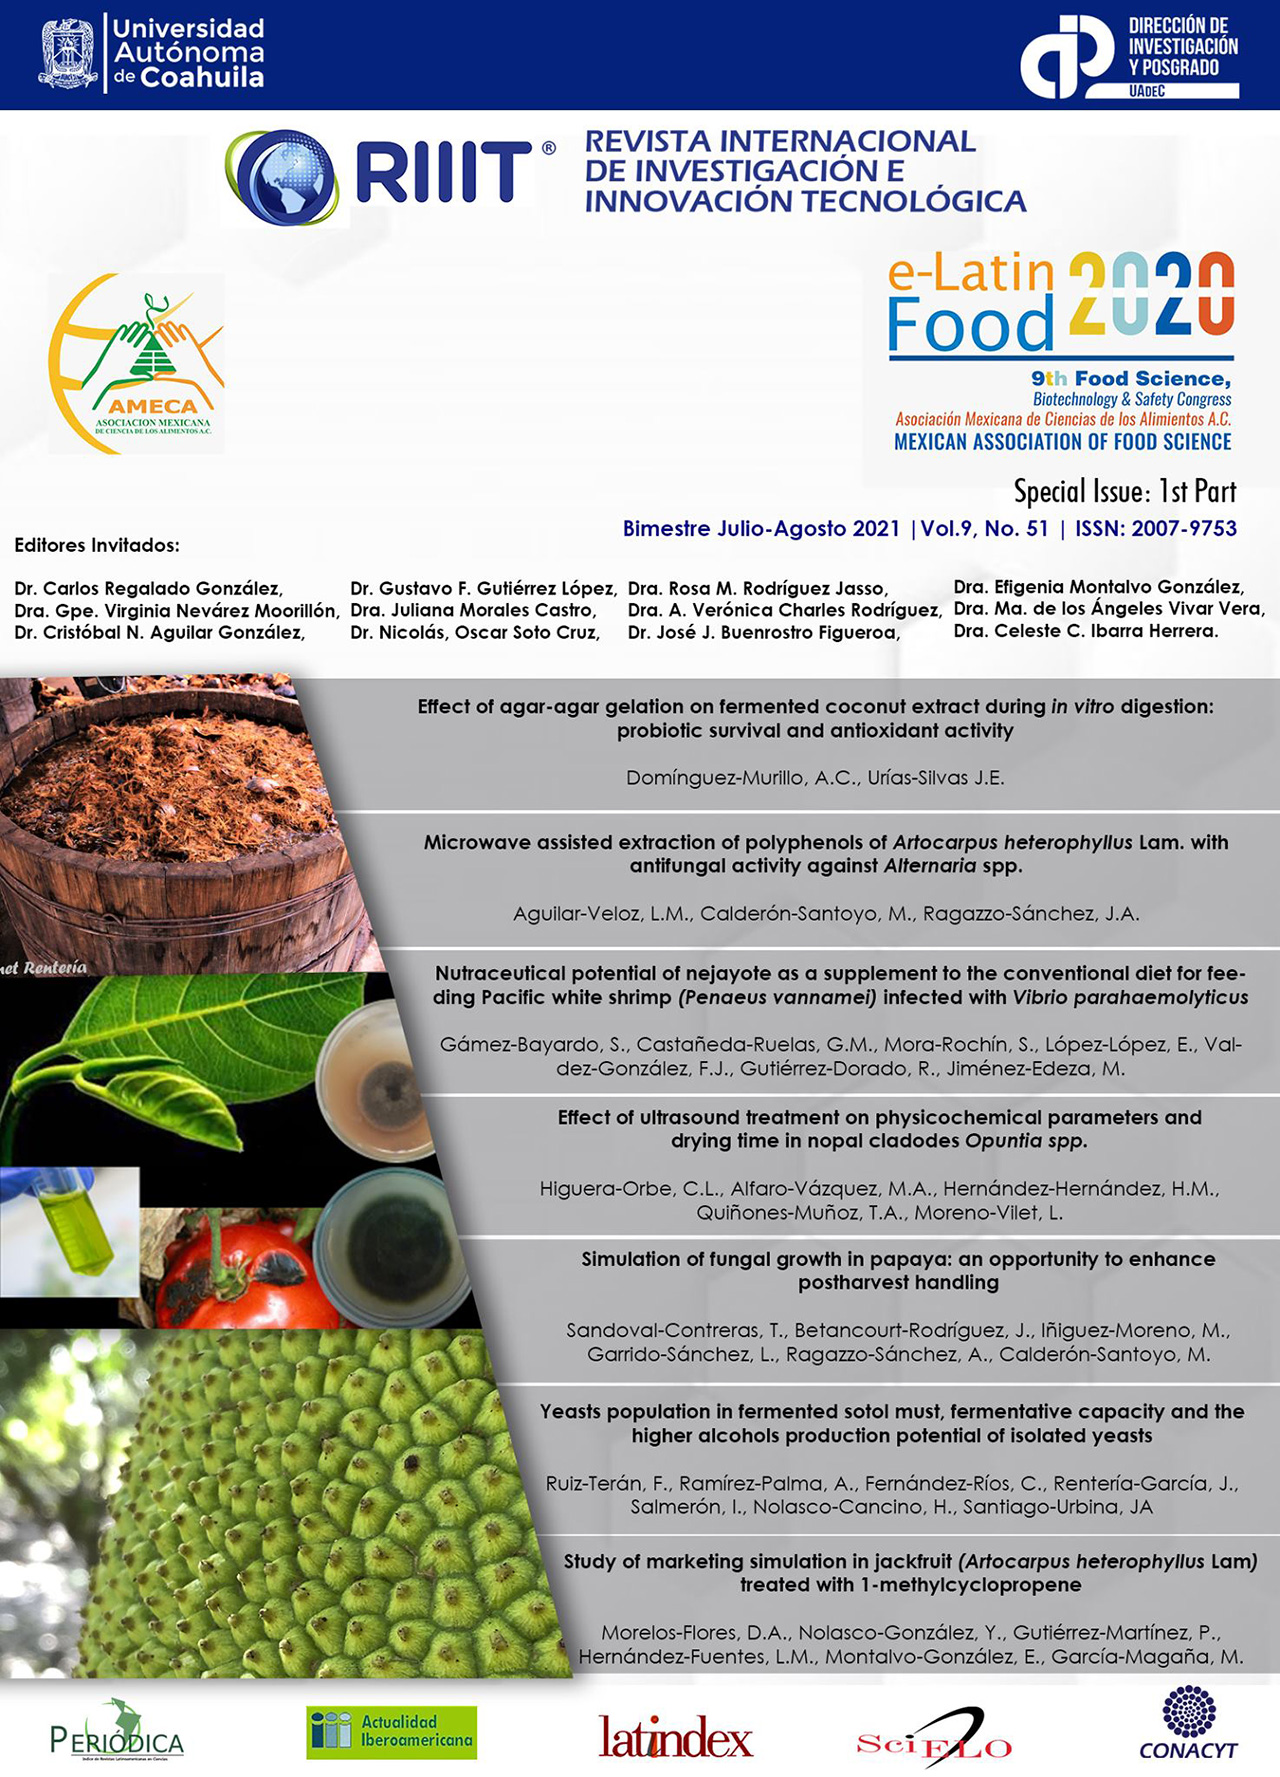 RIIIT / e-Latin Food 2020. Special Issue: 1st Part Vol. 9, No. 51 - AMECA, AC